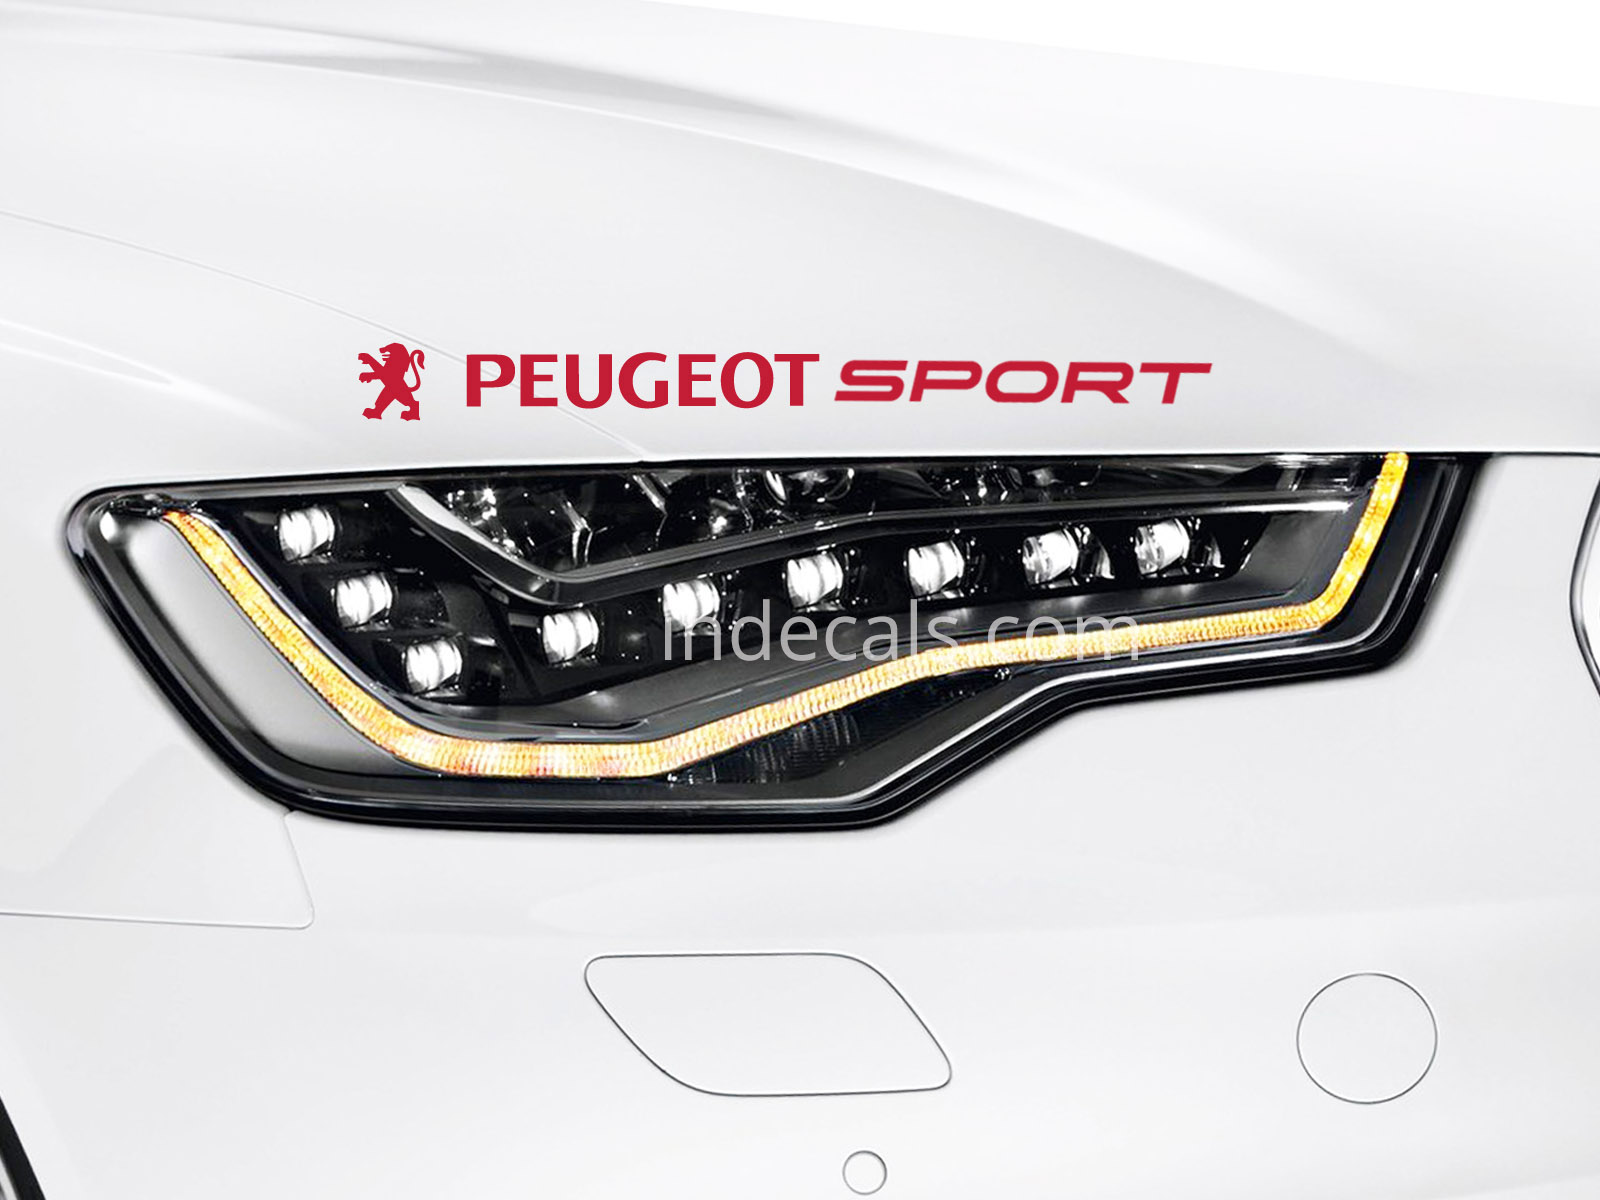 1 x Peugeot Sport Sticker - Red